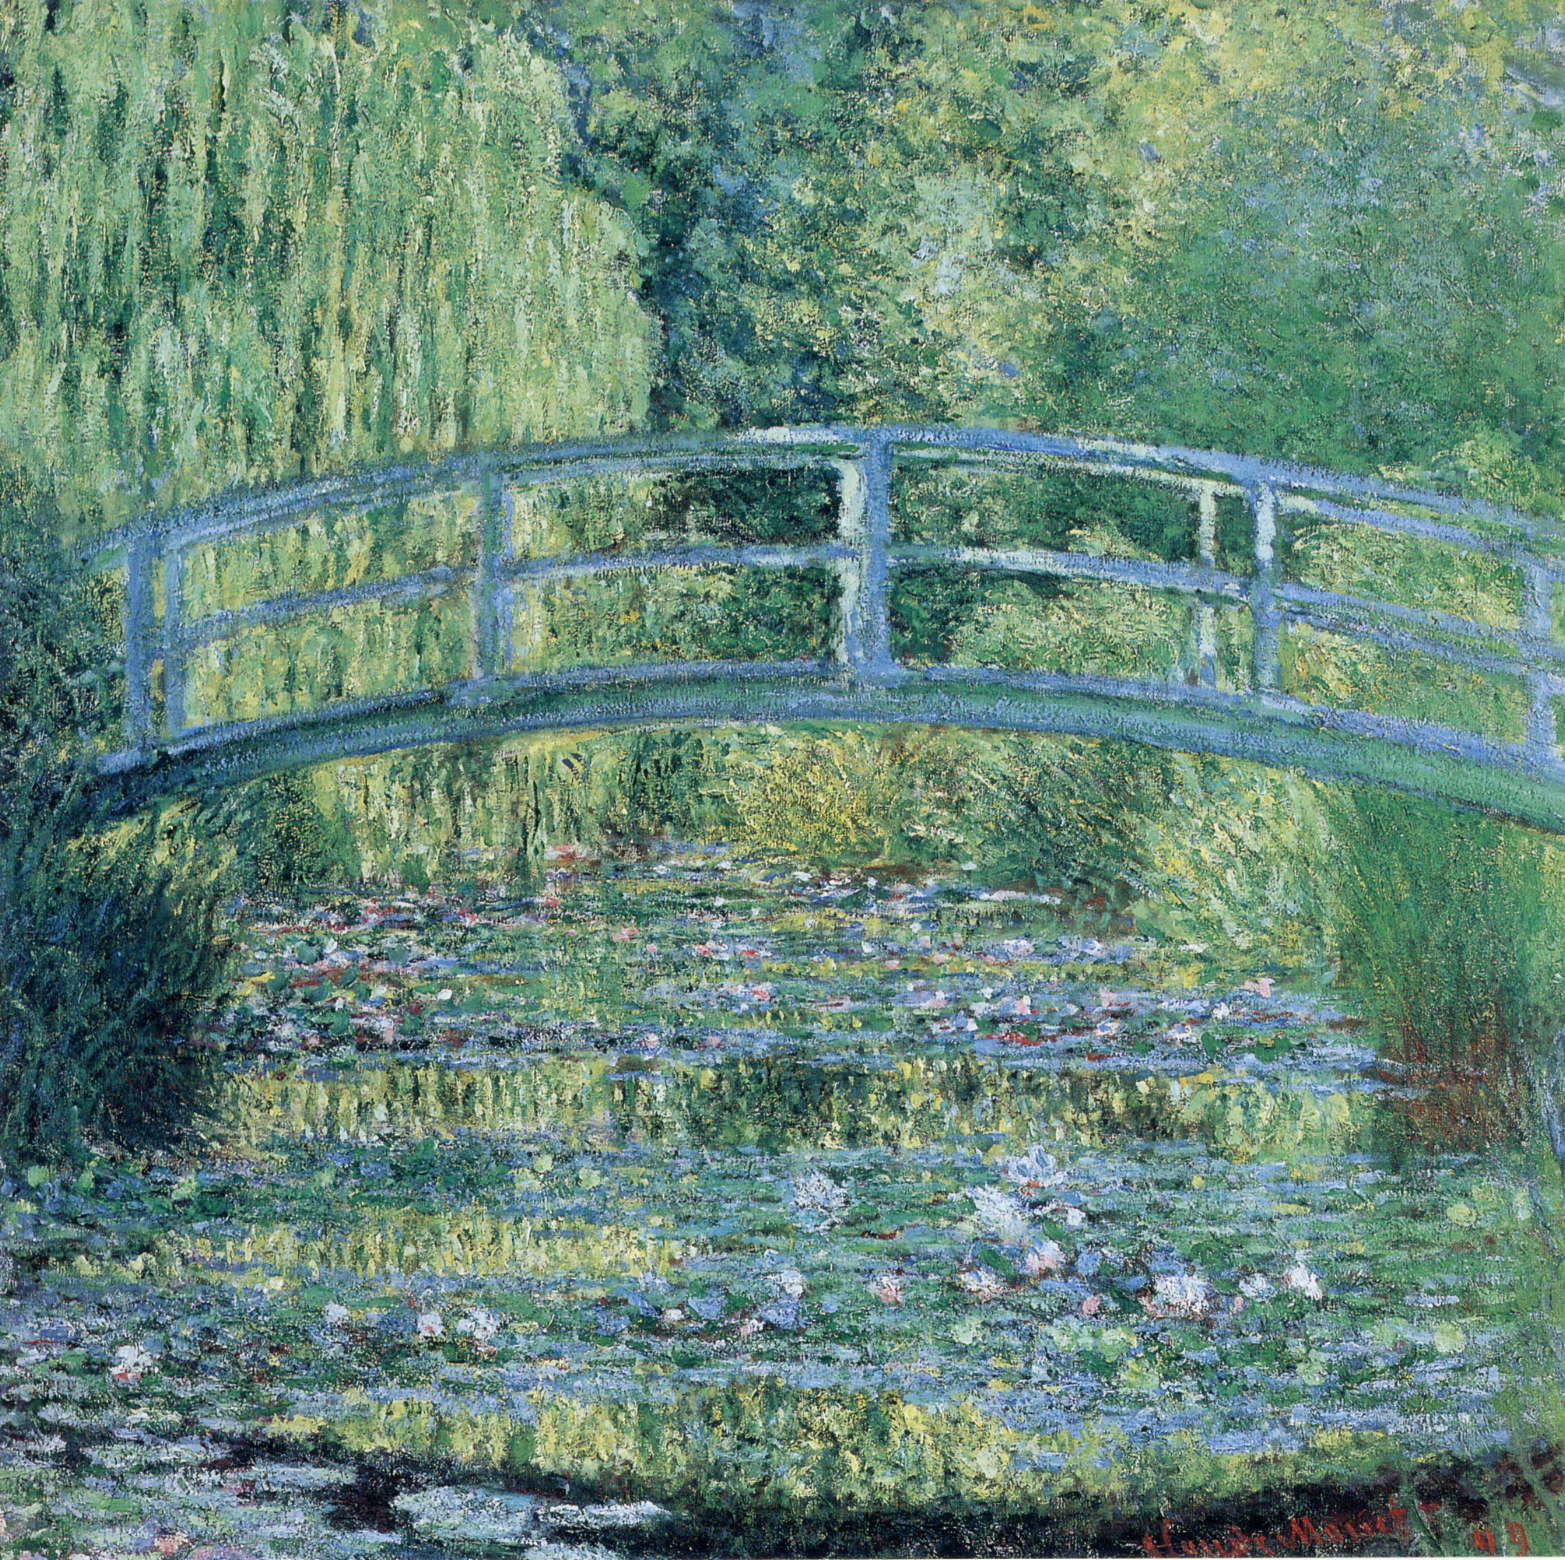 Claude+Monet-1840-1926 (835).jpg